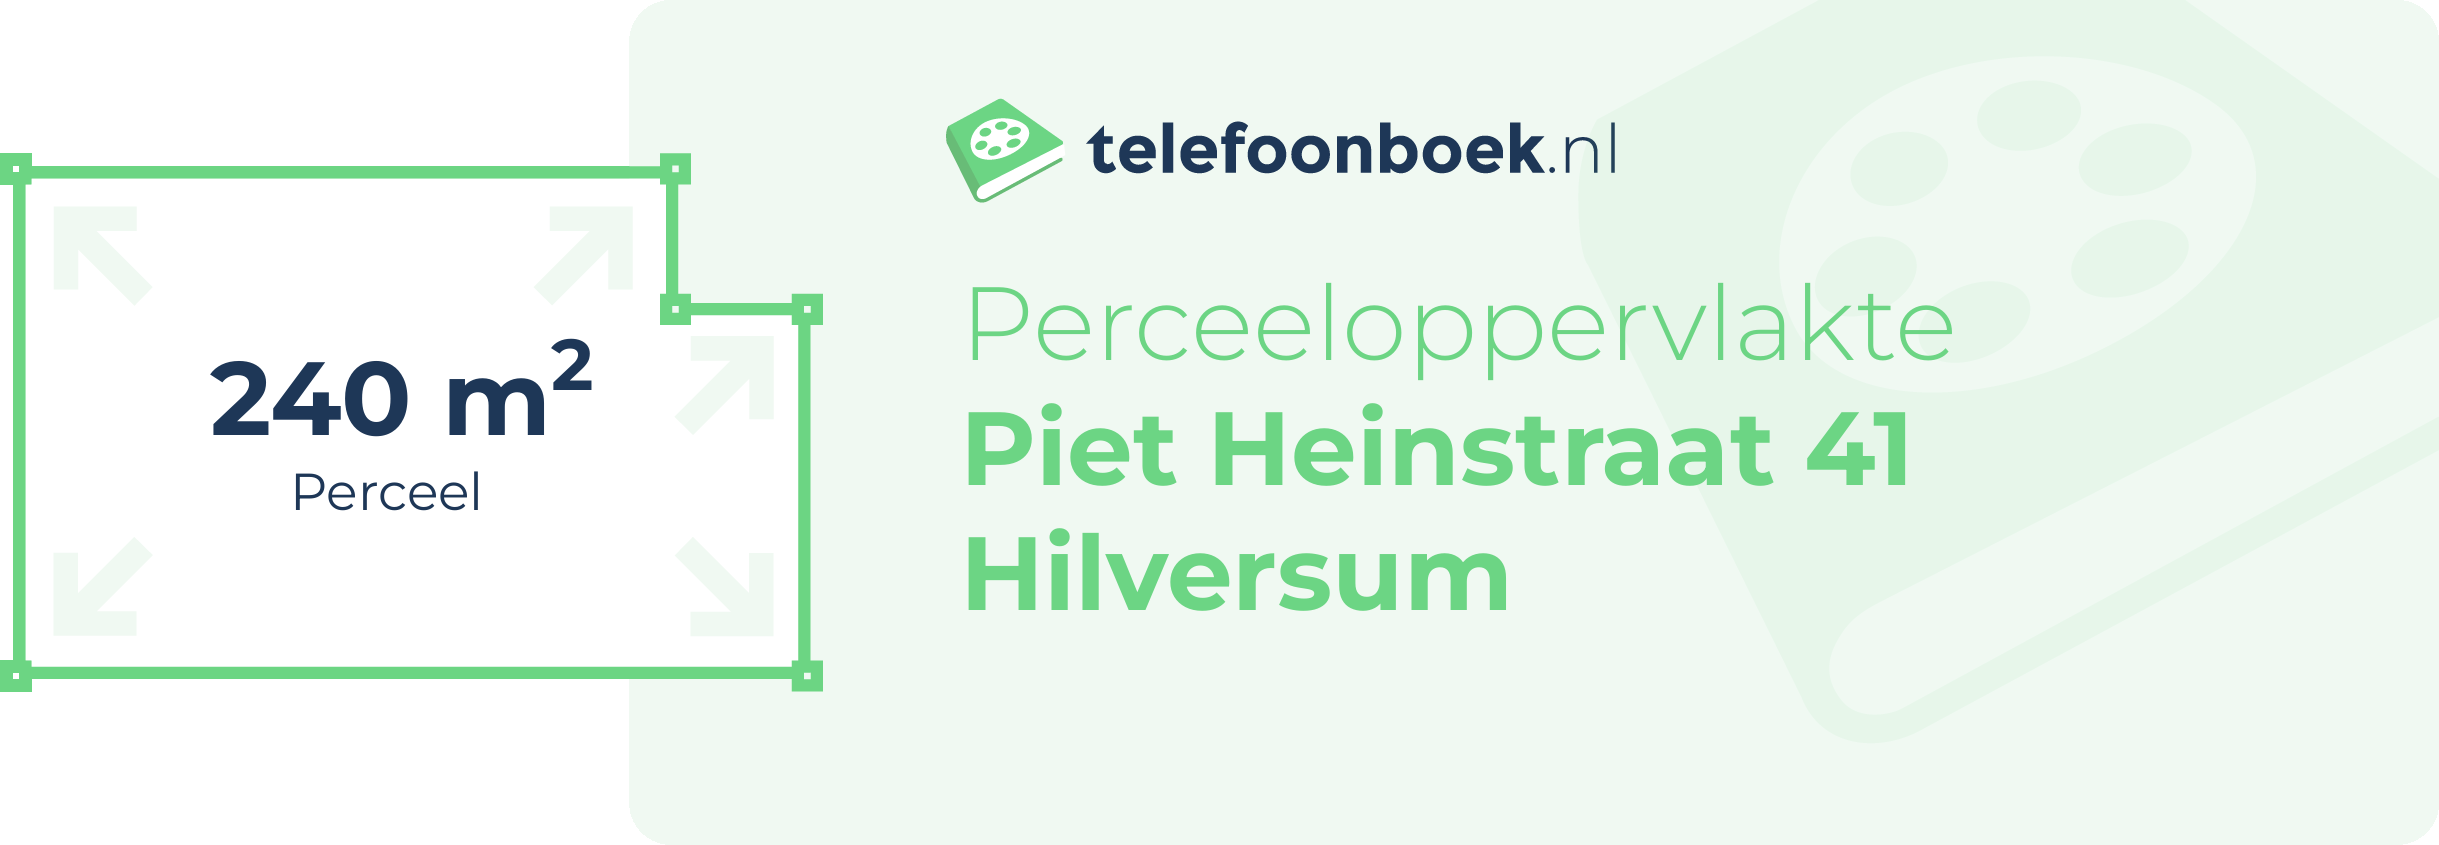 Perceeloppervlakte Piet Heinstraat 41 Hilversum